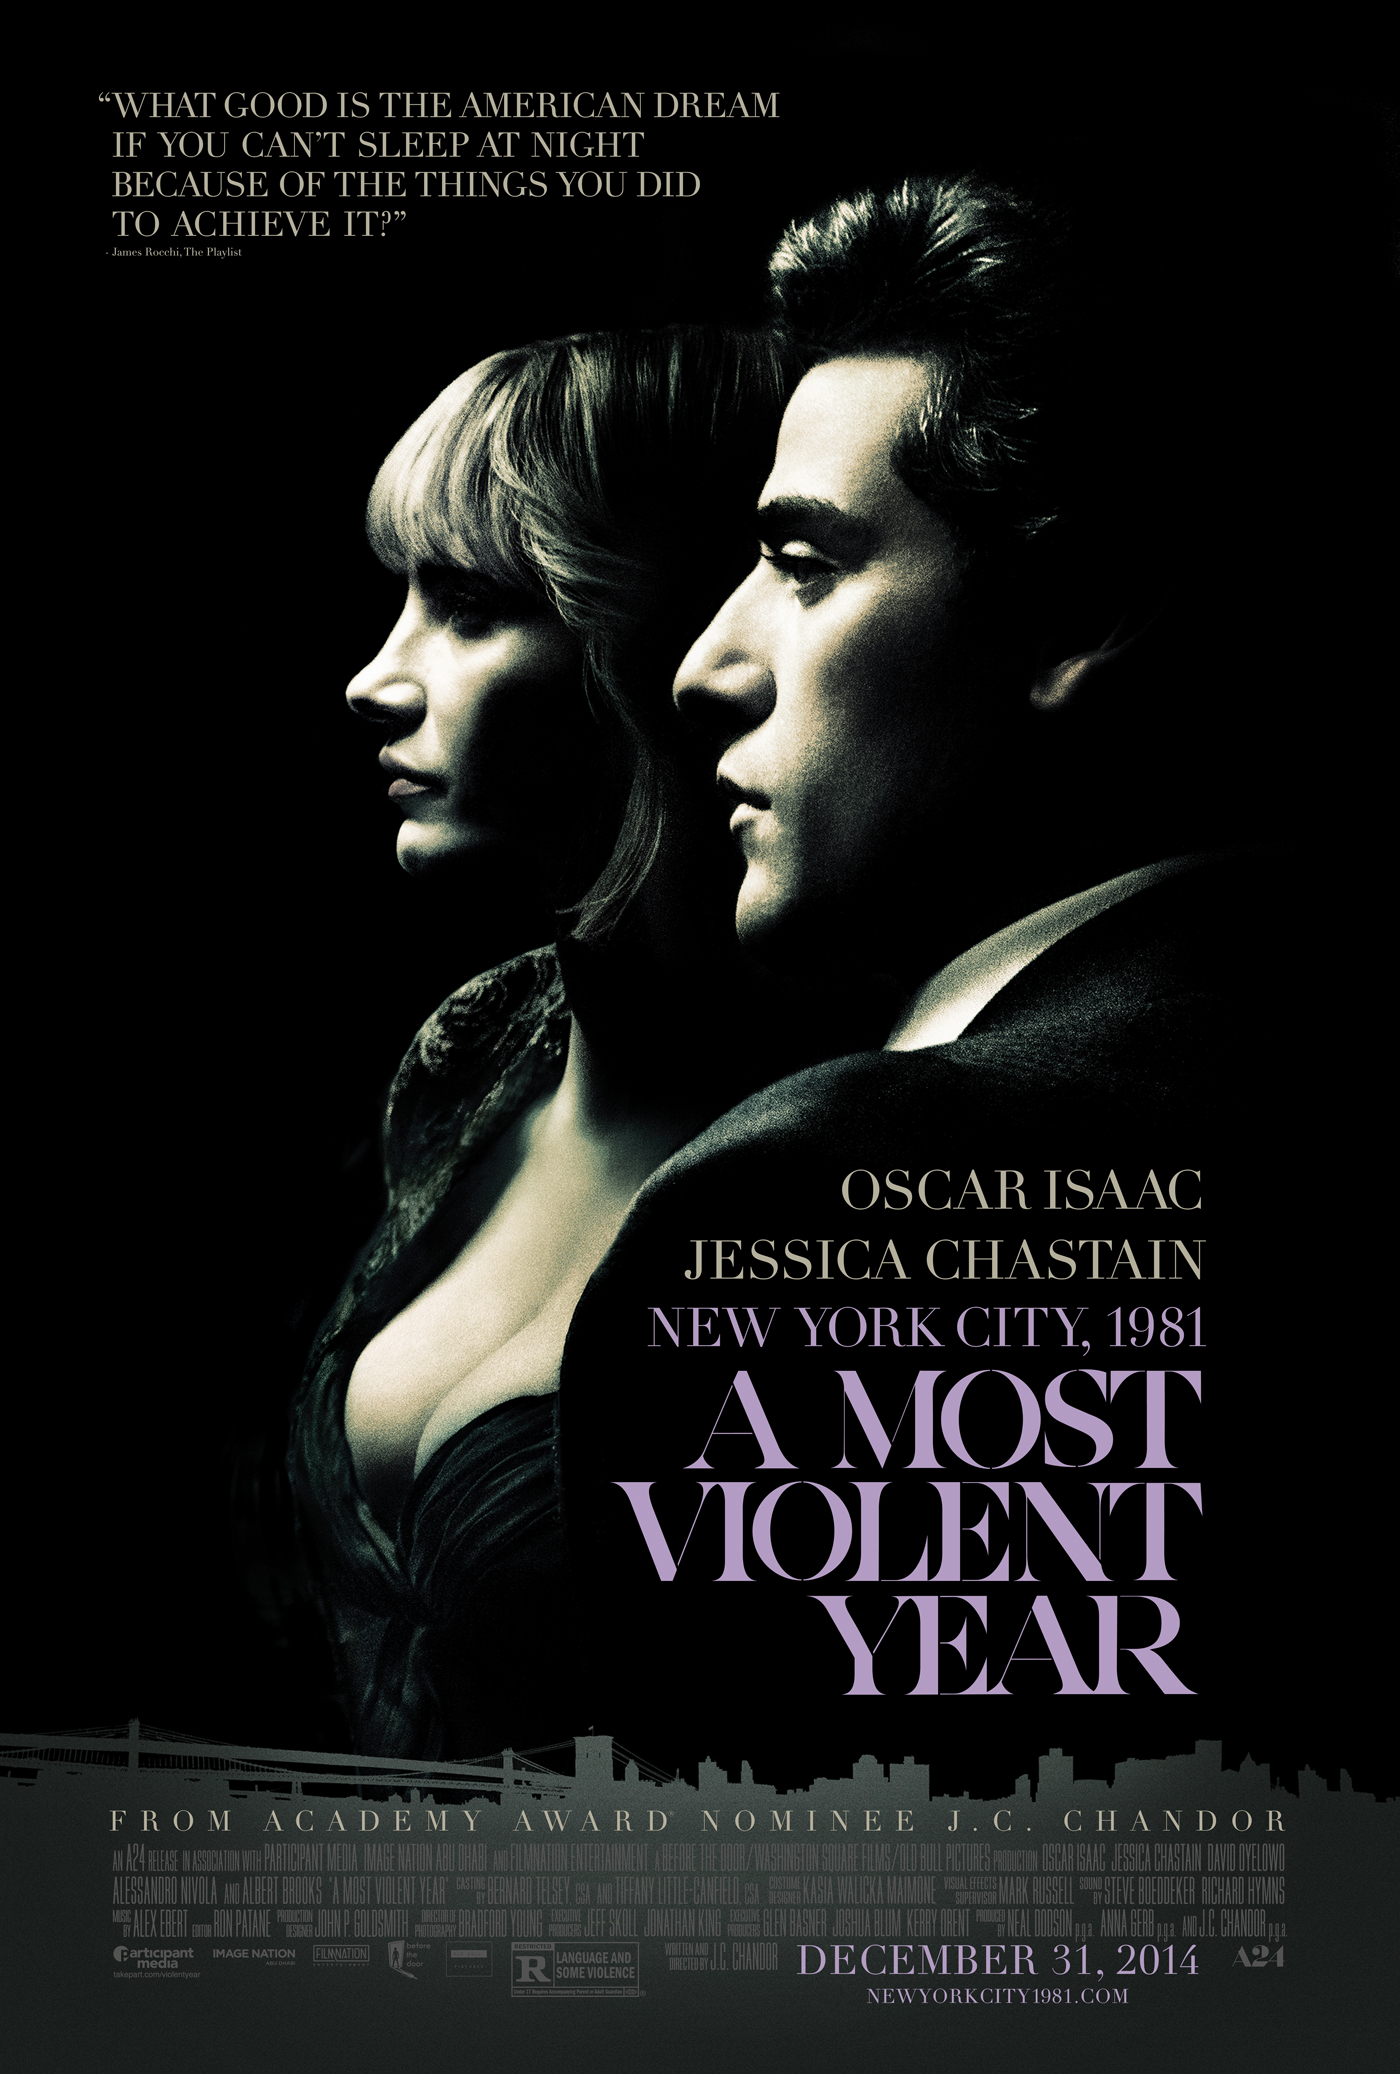 Albert Brooks, Alessandro Nivola, David Oyelowo, Oscar Isaac and Jessica Chastain in A Most Violent Year (2014)